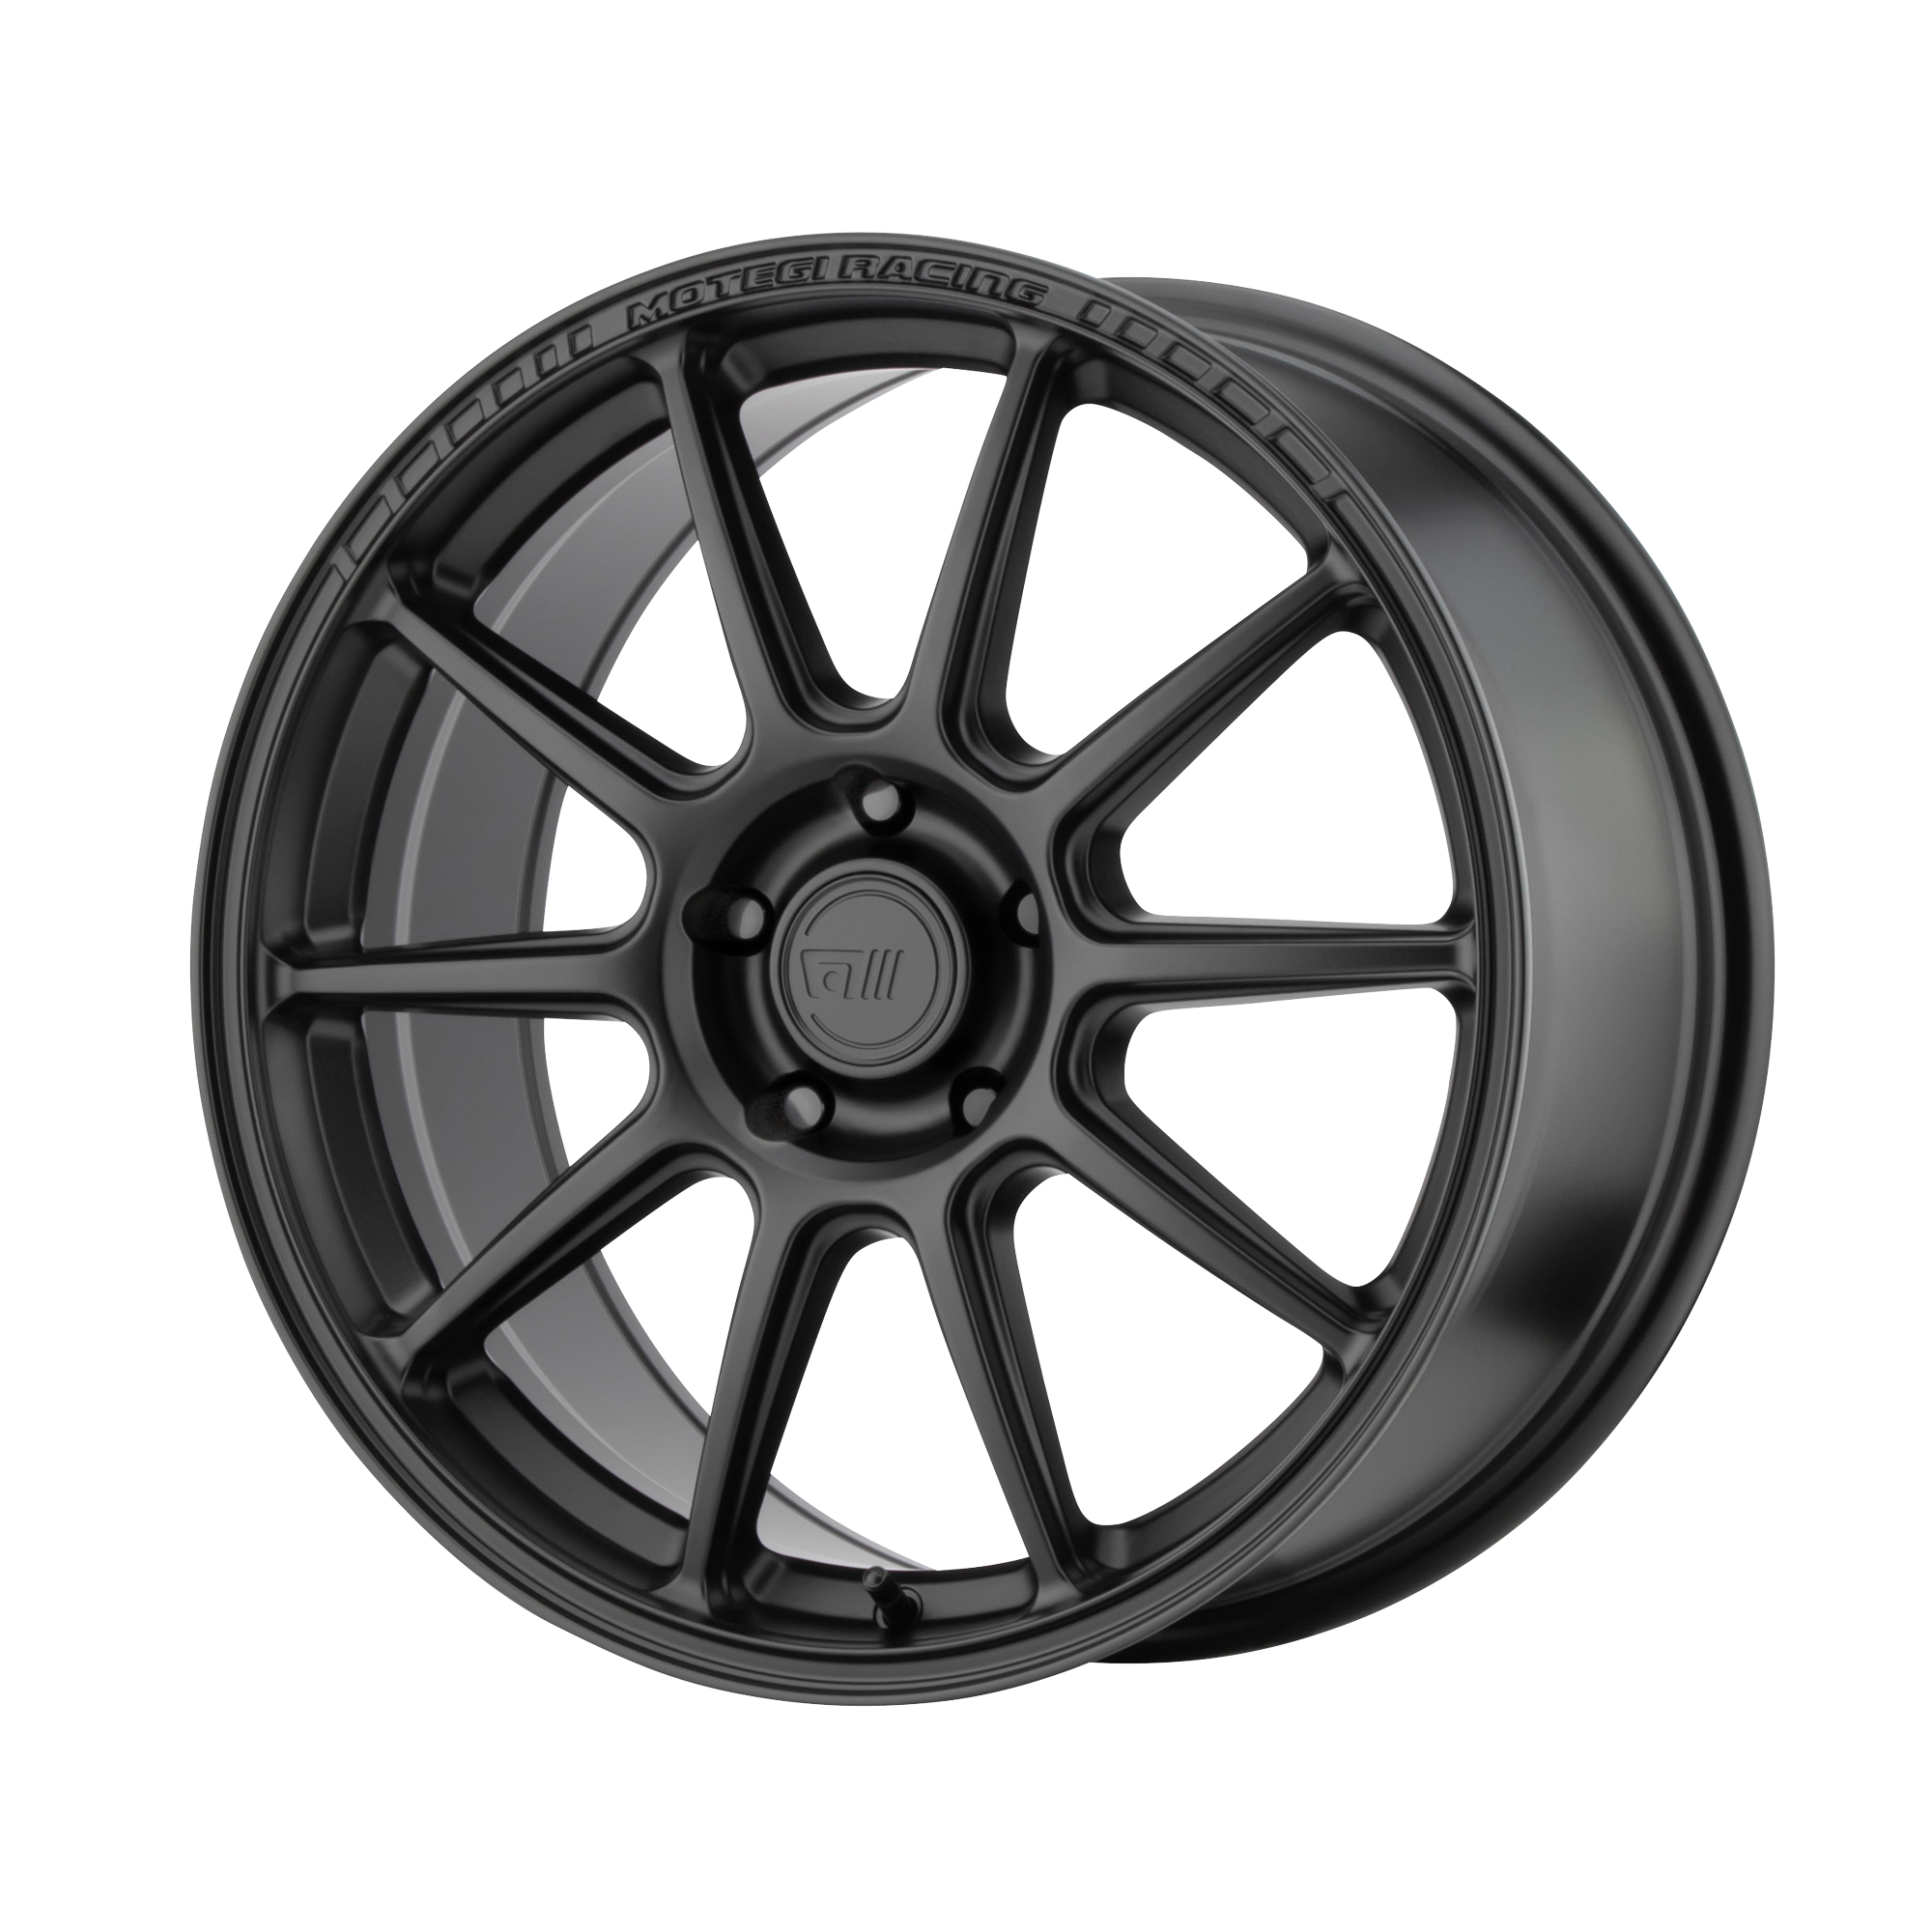 MR140 18x8.5 5x112.00 SATIN BLACK (35 mm) - Tires and Engine Performance